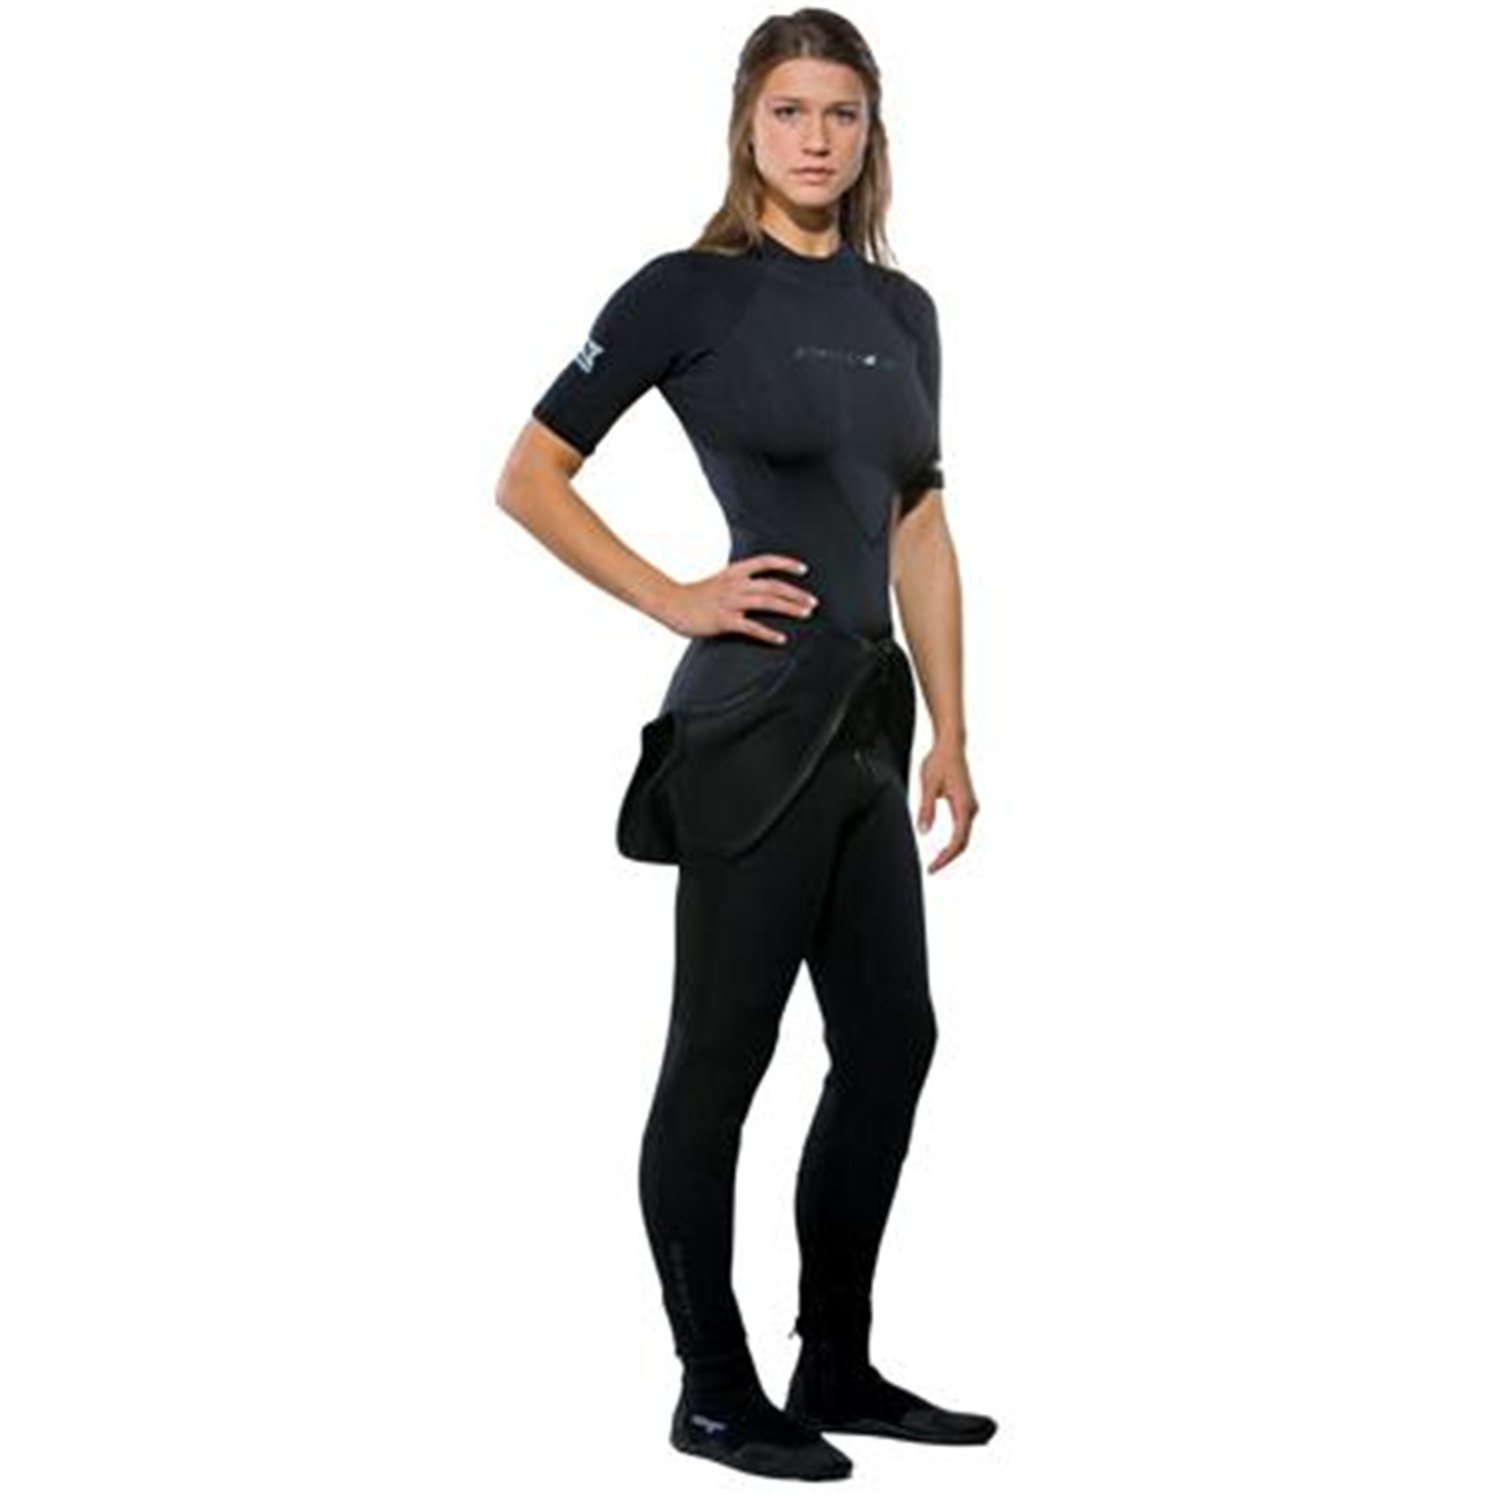 Neosport by Henderson NeoSport XSPAN 1.5mm Women's Short Sleeve Top - image 1 of 2